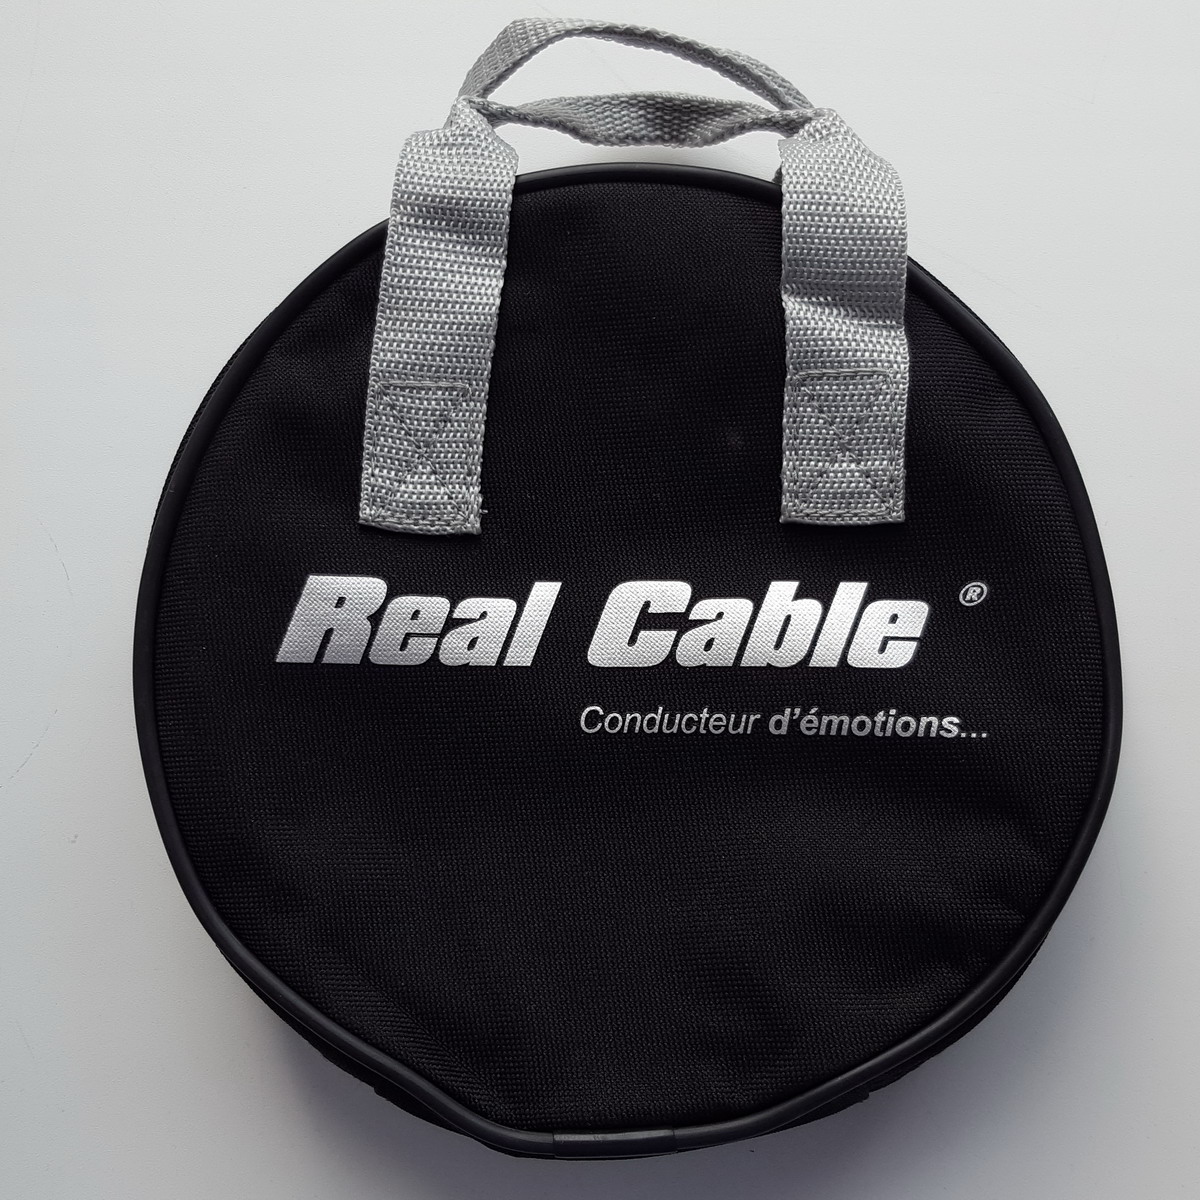   2   : Real Cable  (PSKAP 25)  2,5  1,50 